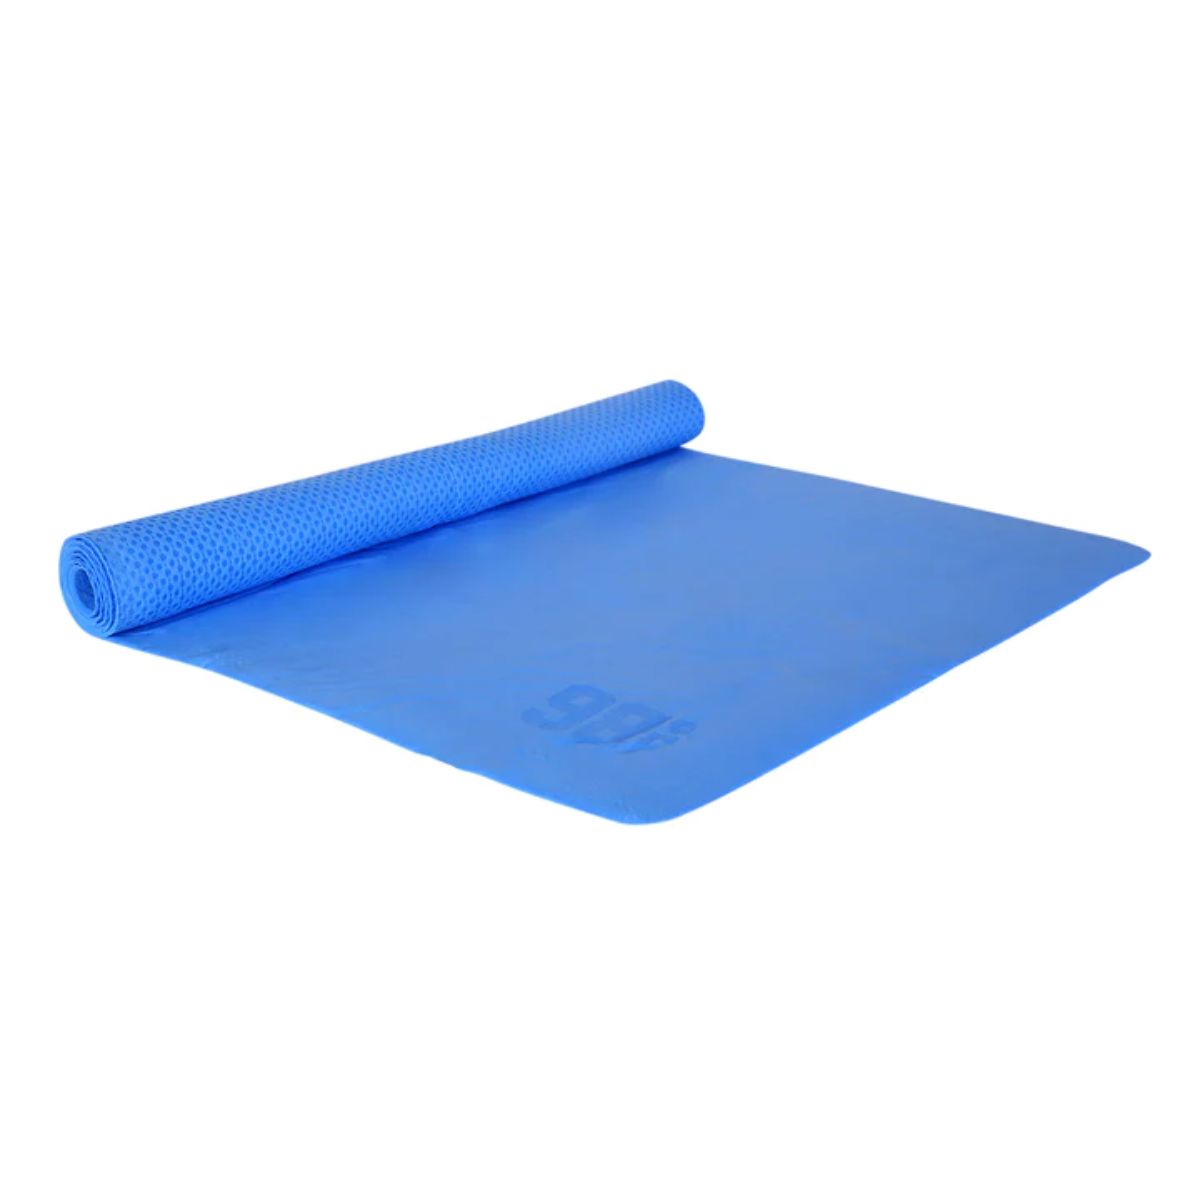 Hyper Body Cooling Towel - Blue 2